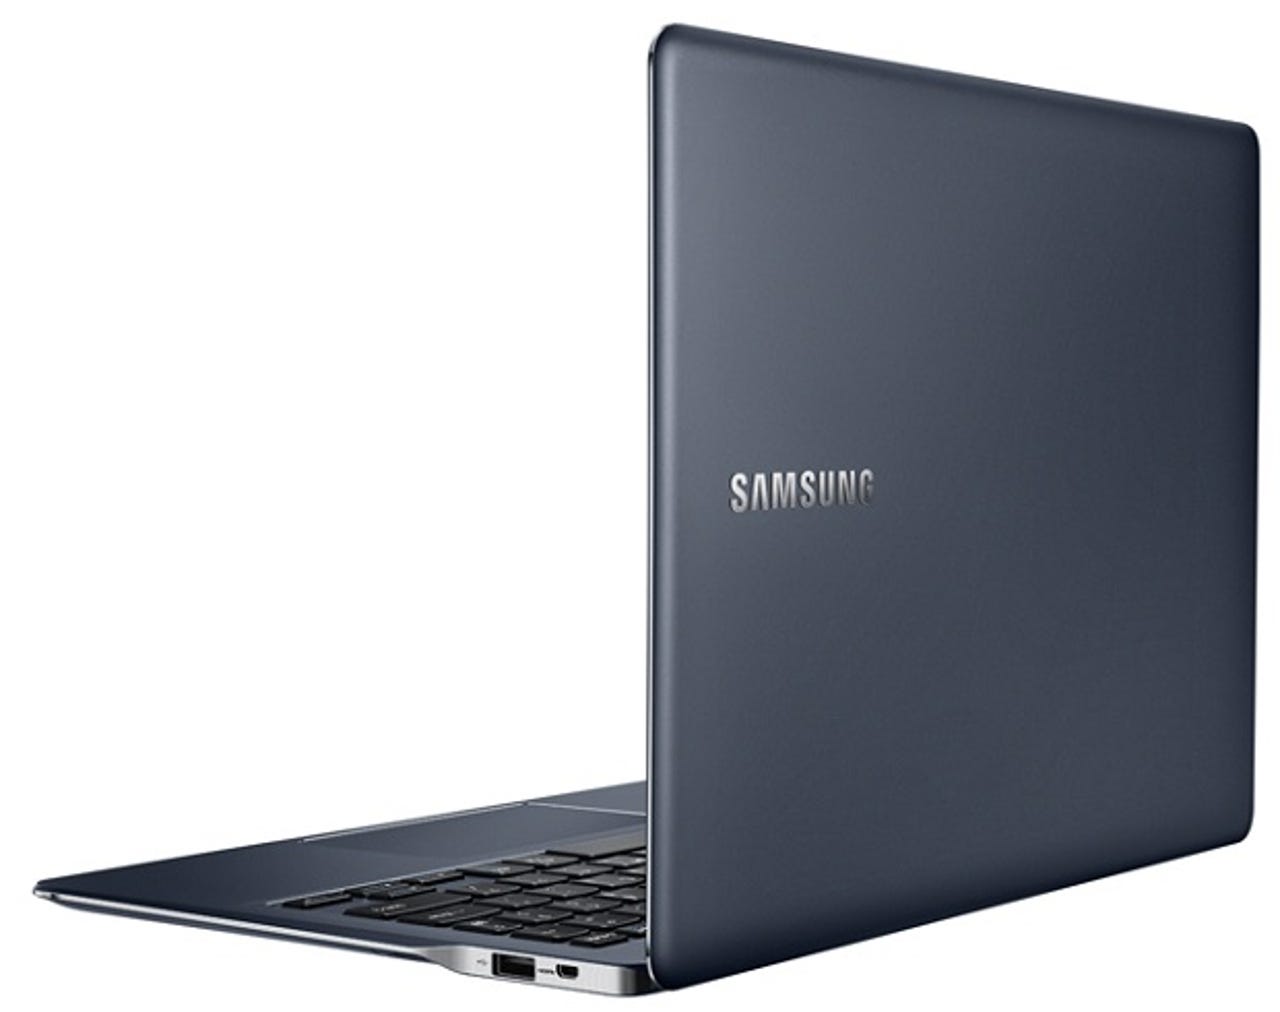 samsung-series-9-2015-edition-ultrabook-laptop.jpg